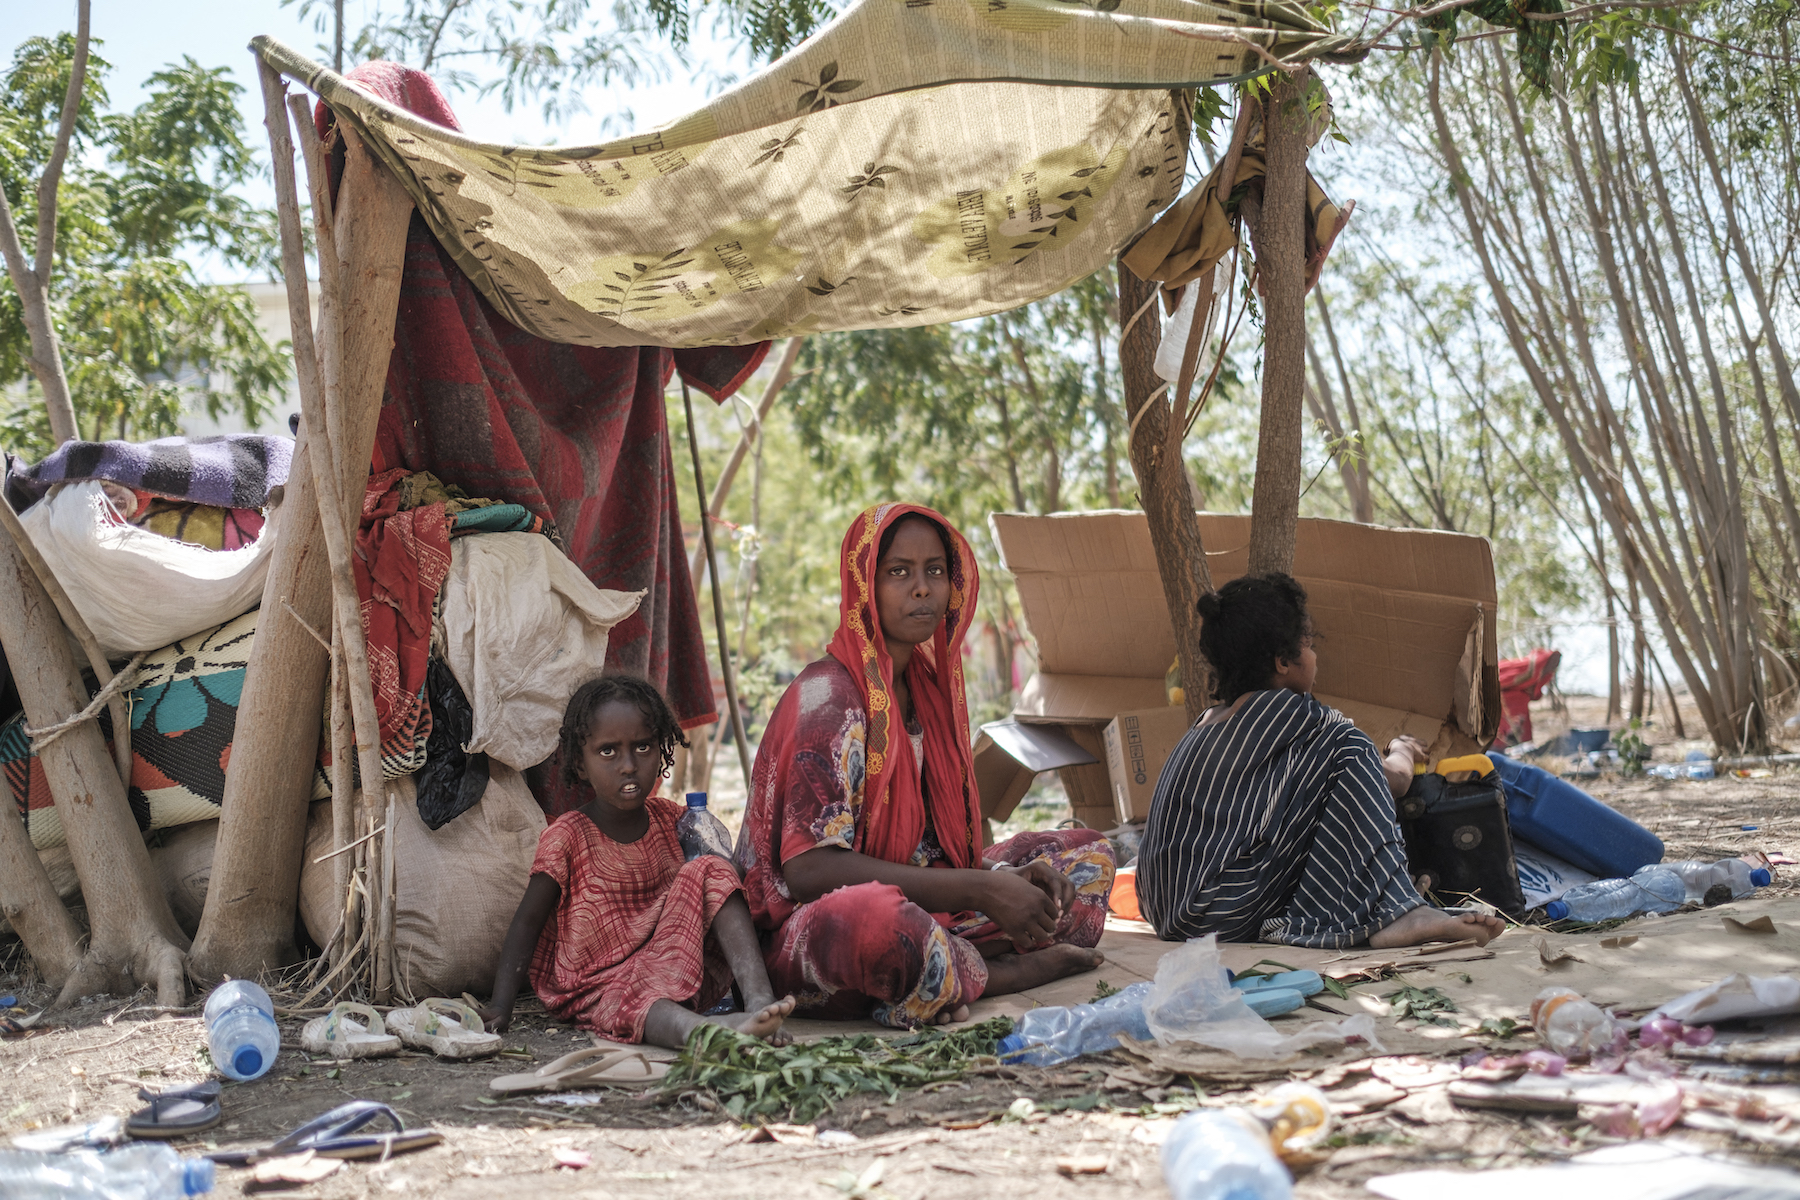 UN investigators warn of risk of future atrocities in Ethiopia